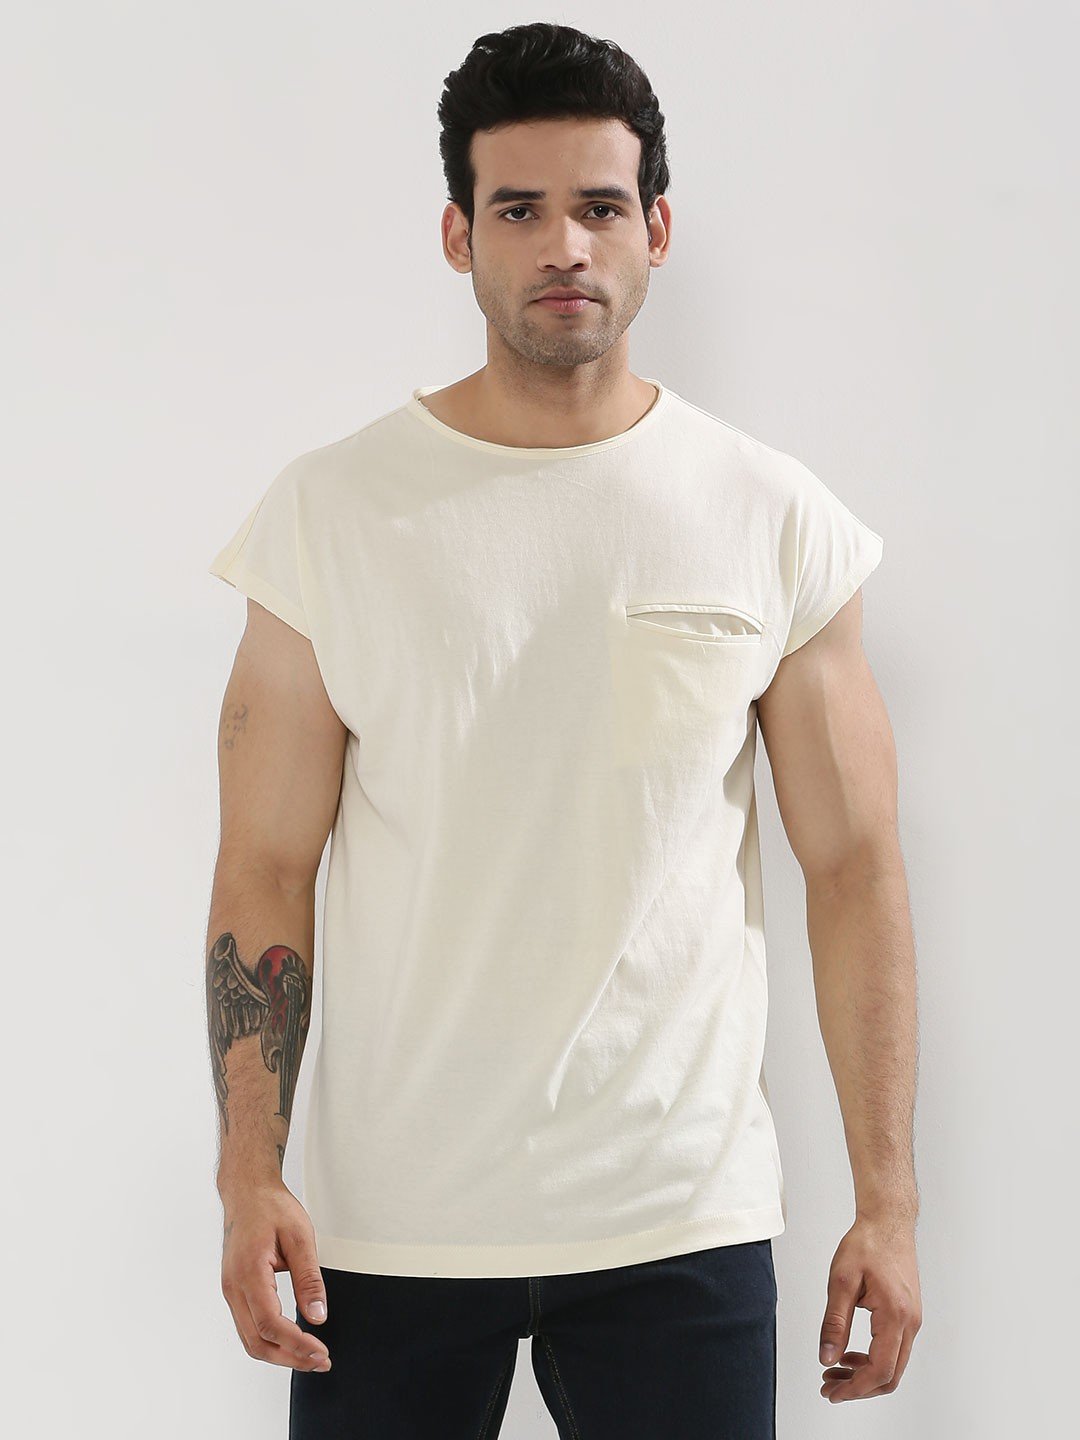 Cap Sleeve t-shirt